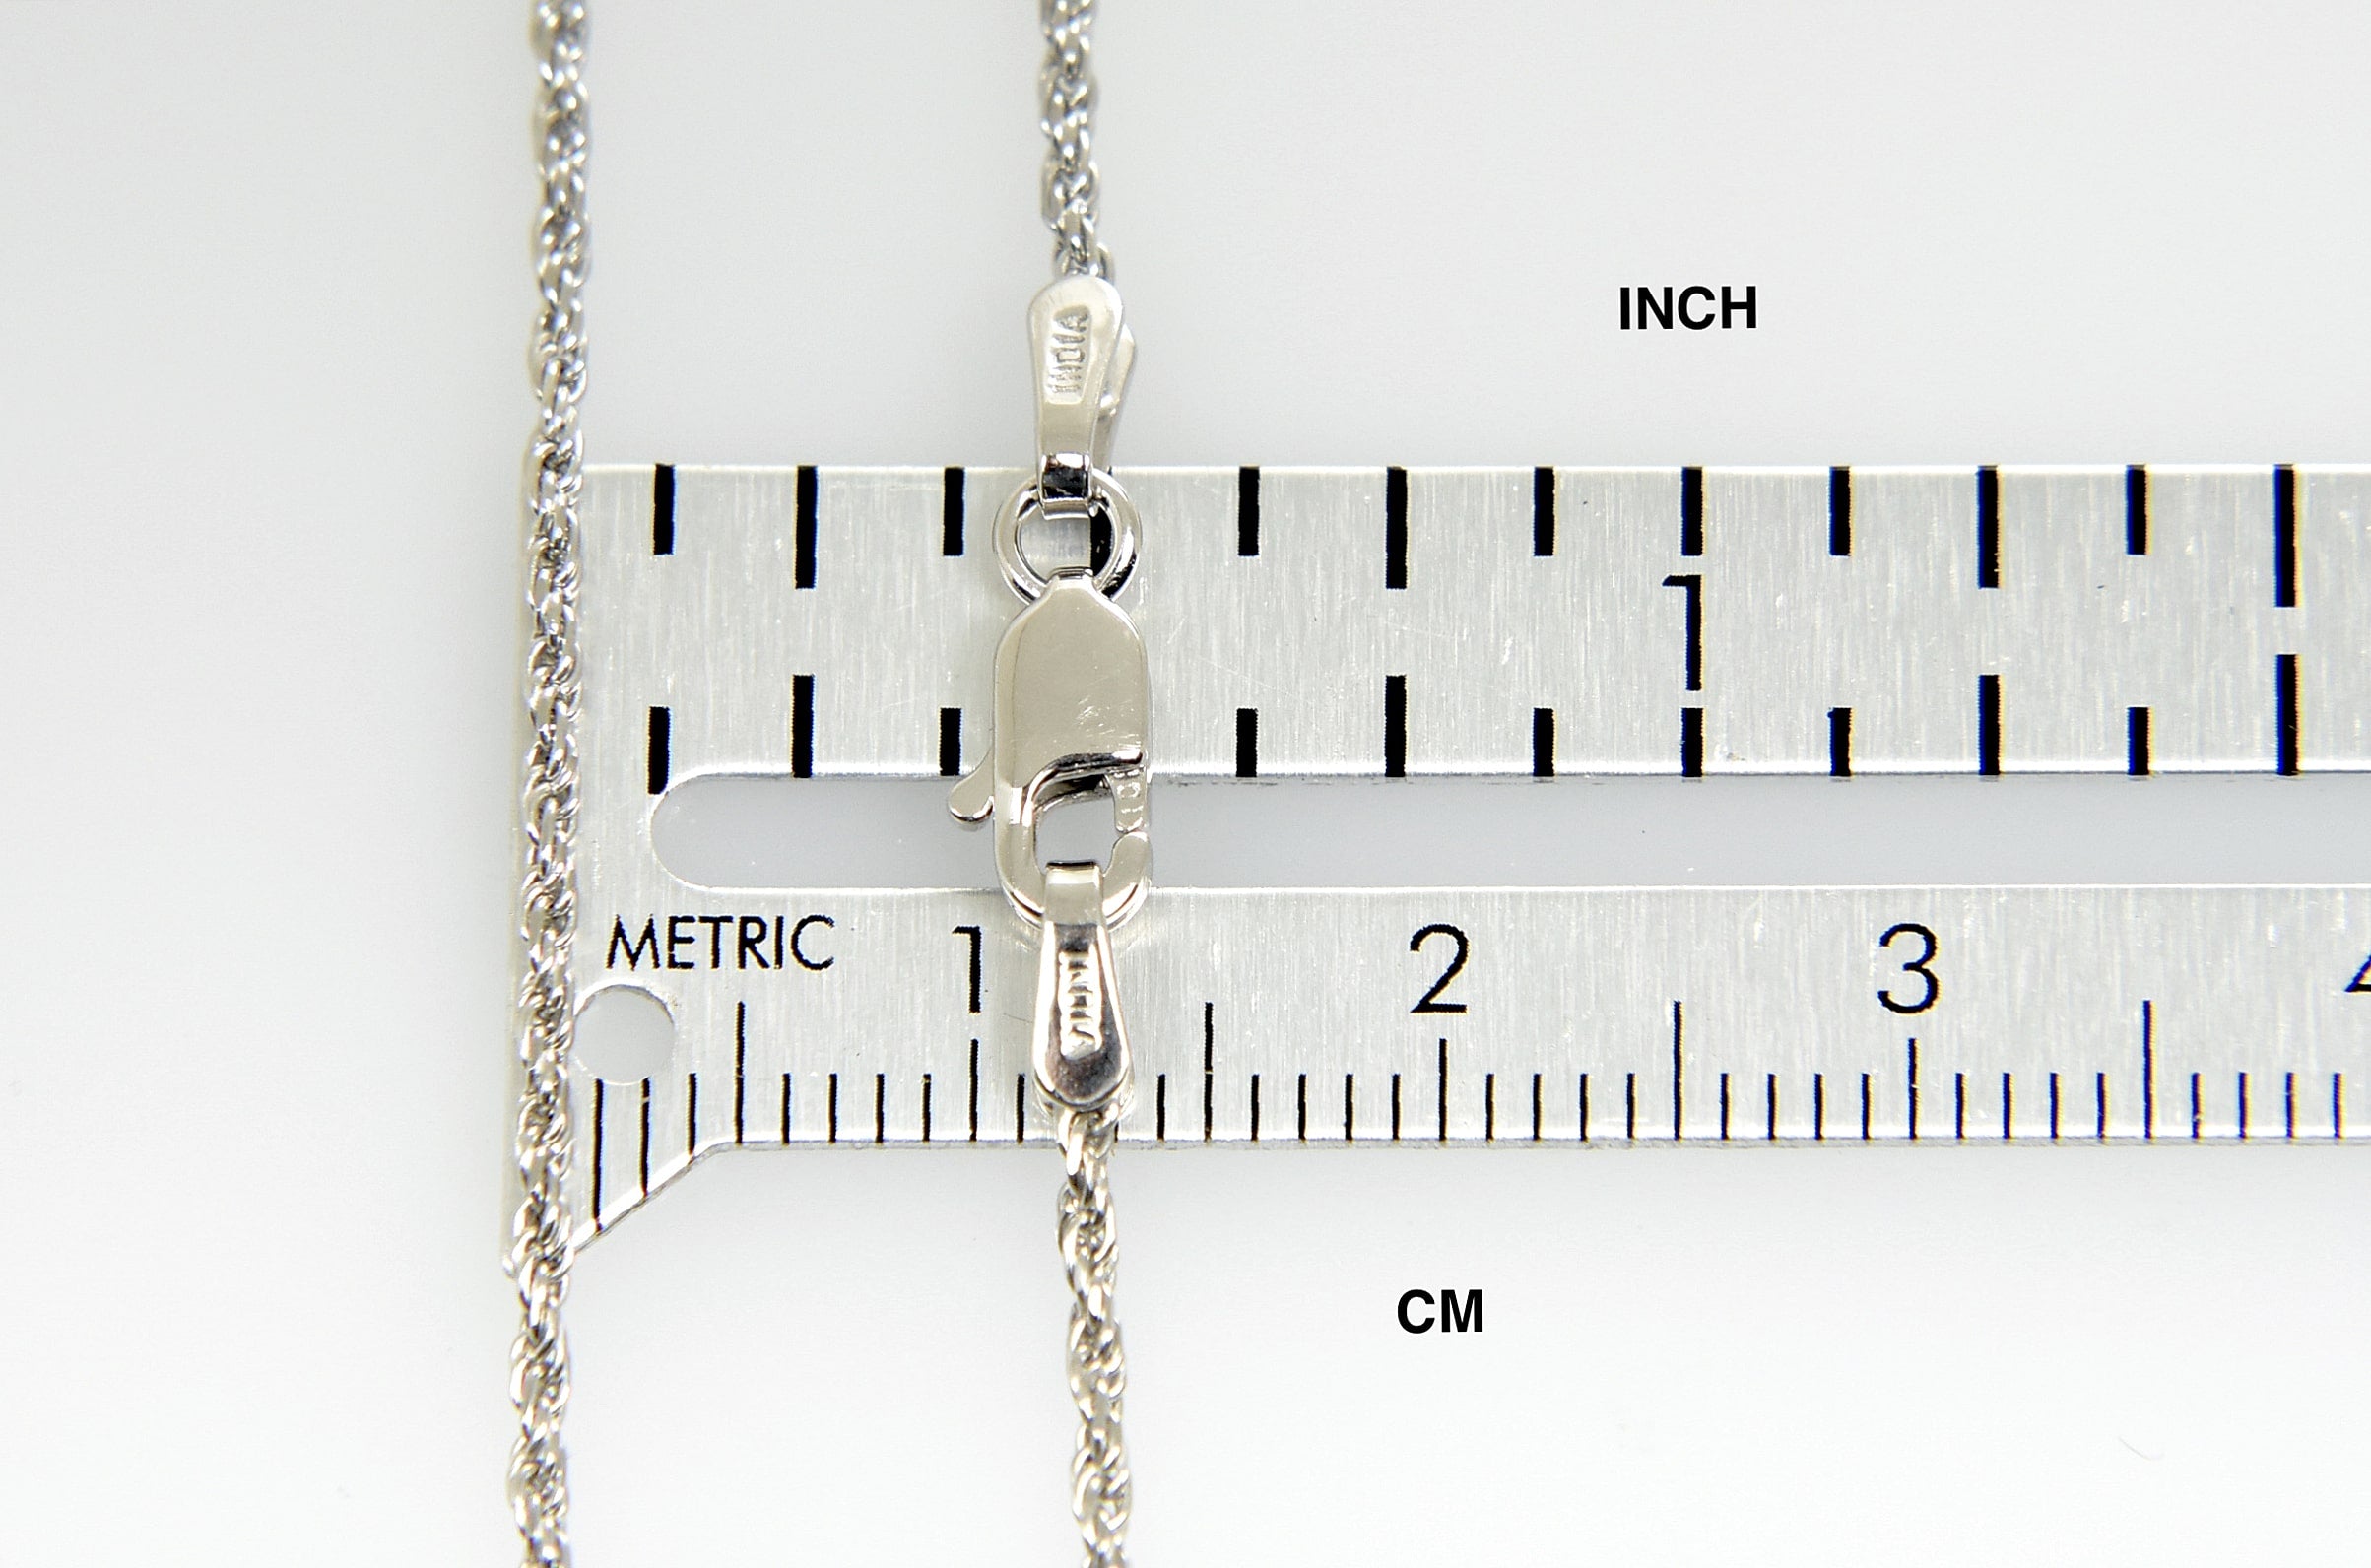 10k White Gold 1.50mm Diamond Cut Rope Bracelet Anklet Choker Necklace Pendant Chain